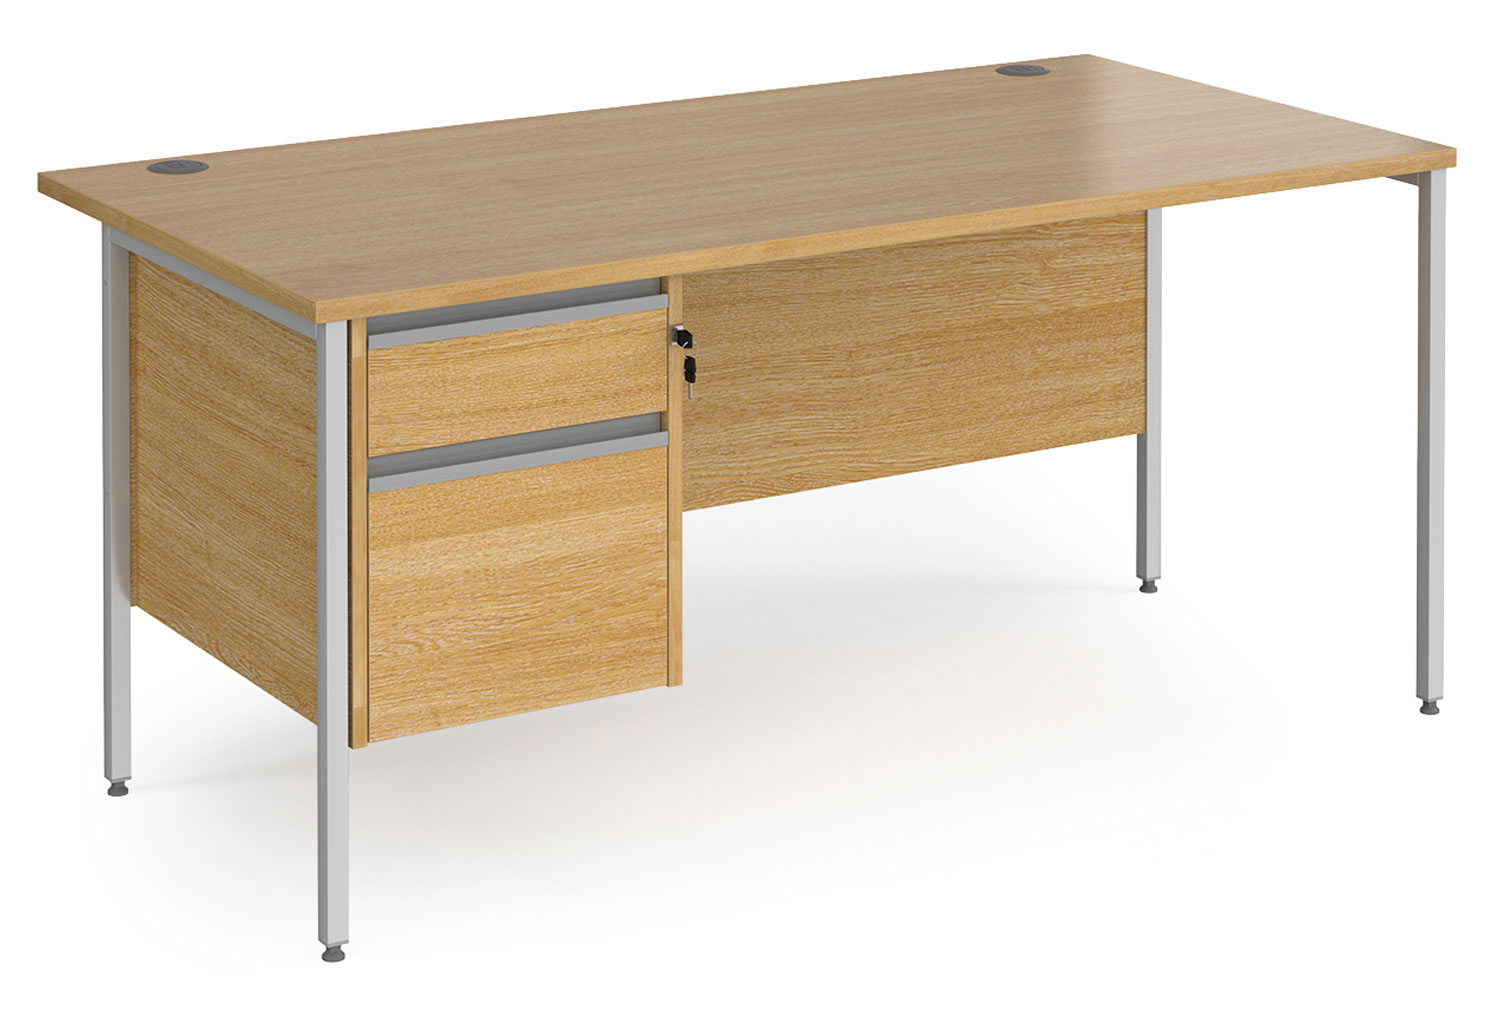 Value Line Classic+ Rectangular H-Leg Office Desk 2 Drawers (Silver Leg), 160wx80dx73h (cm), Oak, Express Delivery